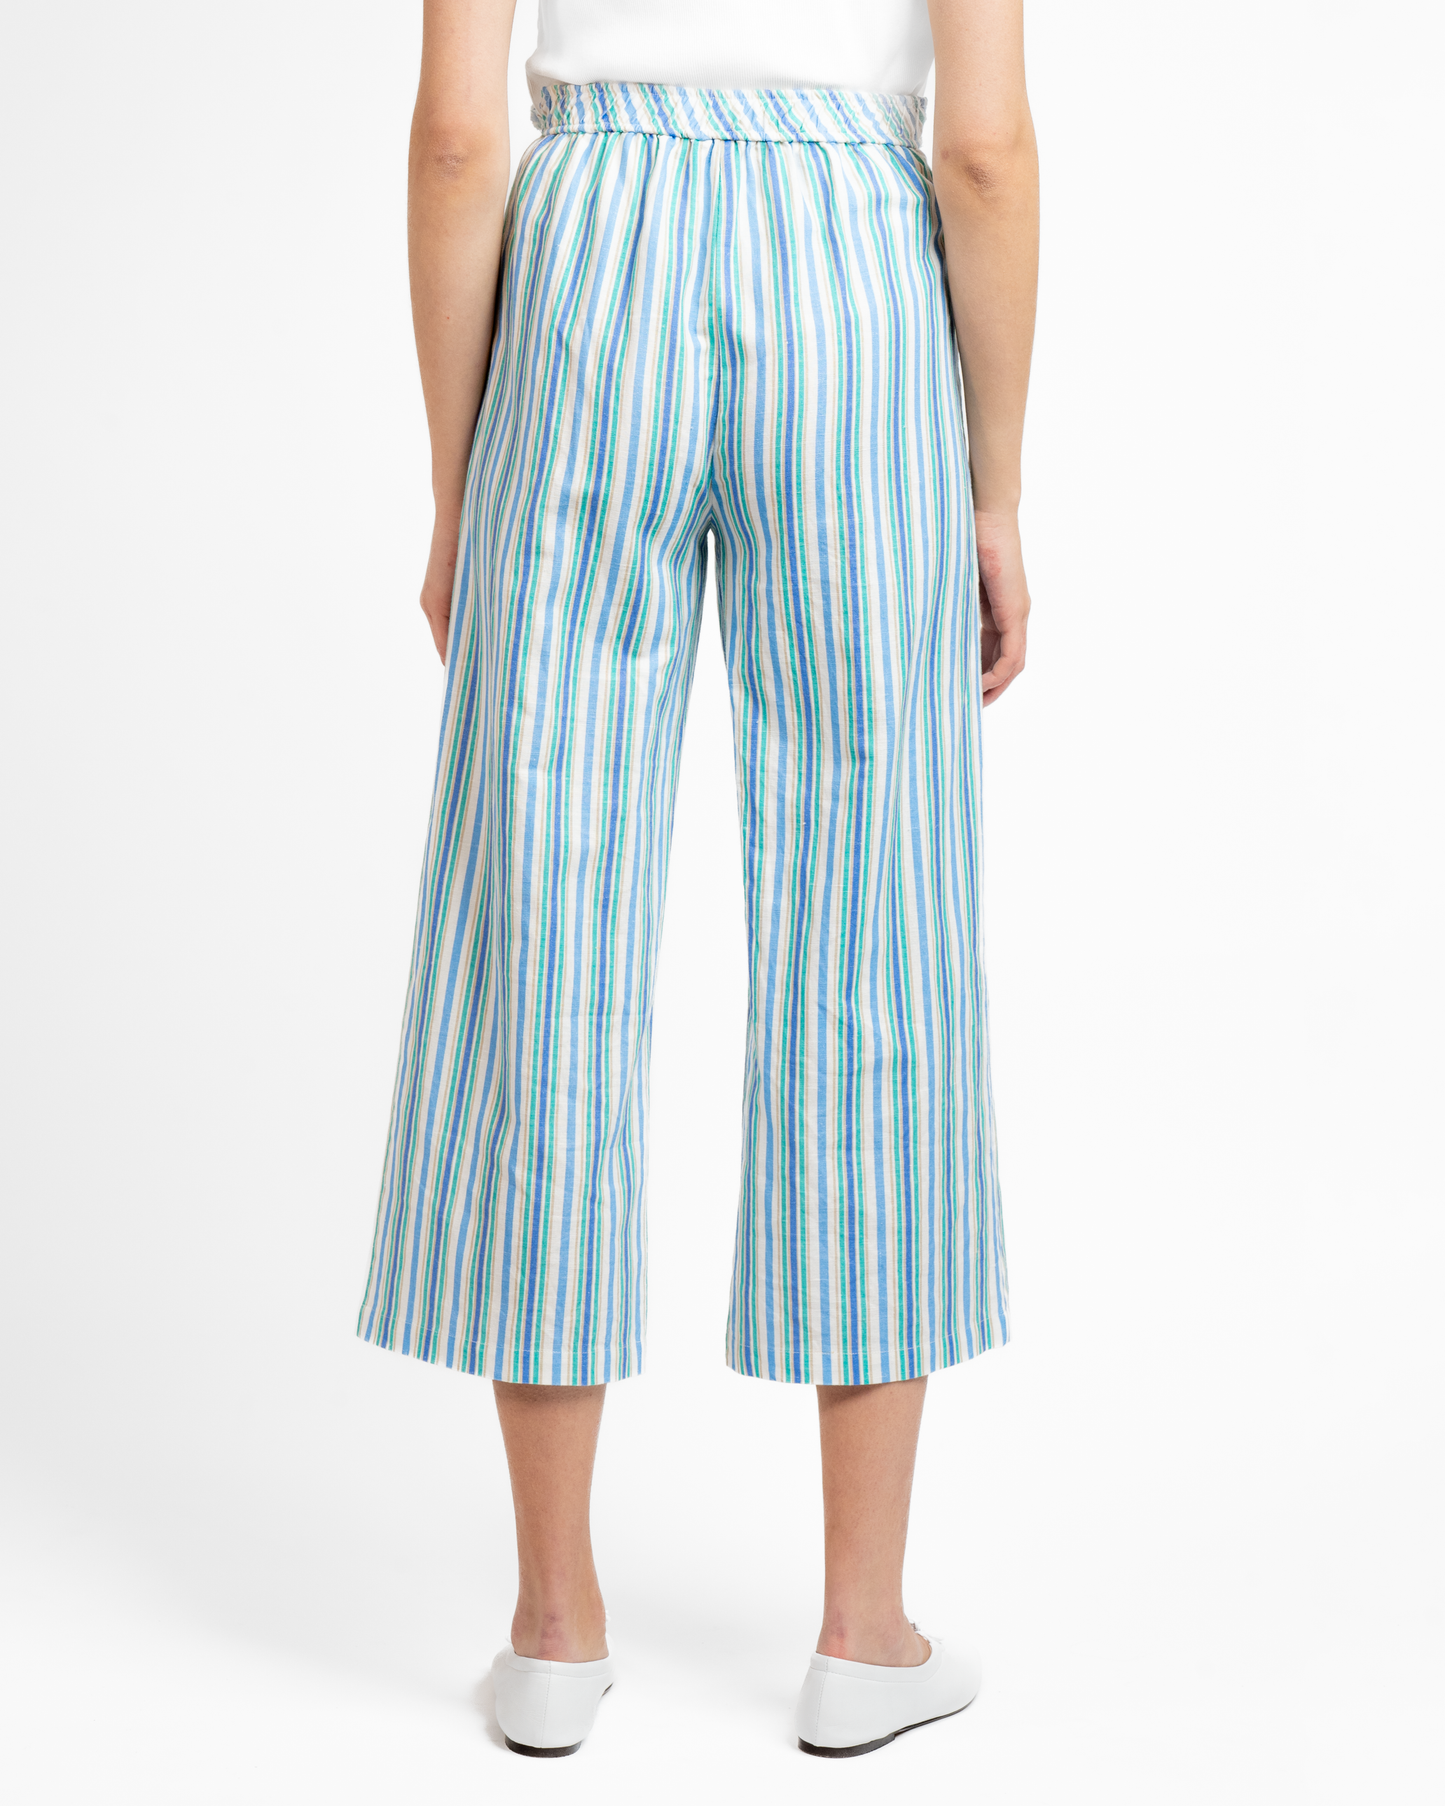 BYLYSE Linen Stripe Pant